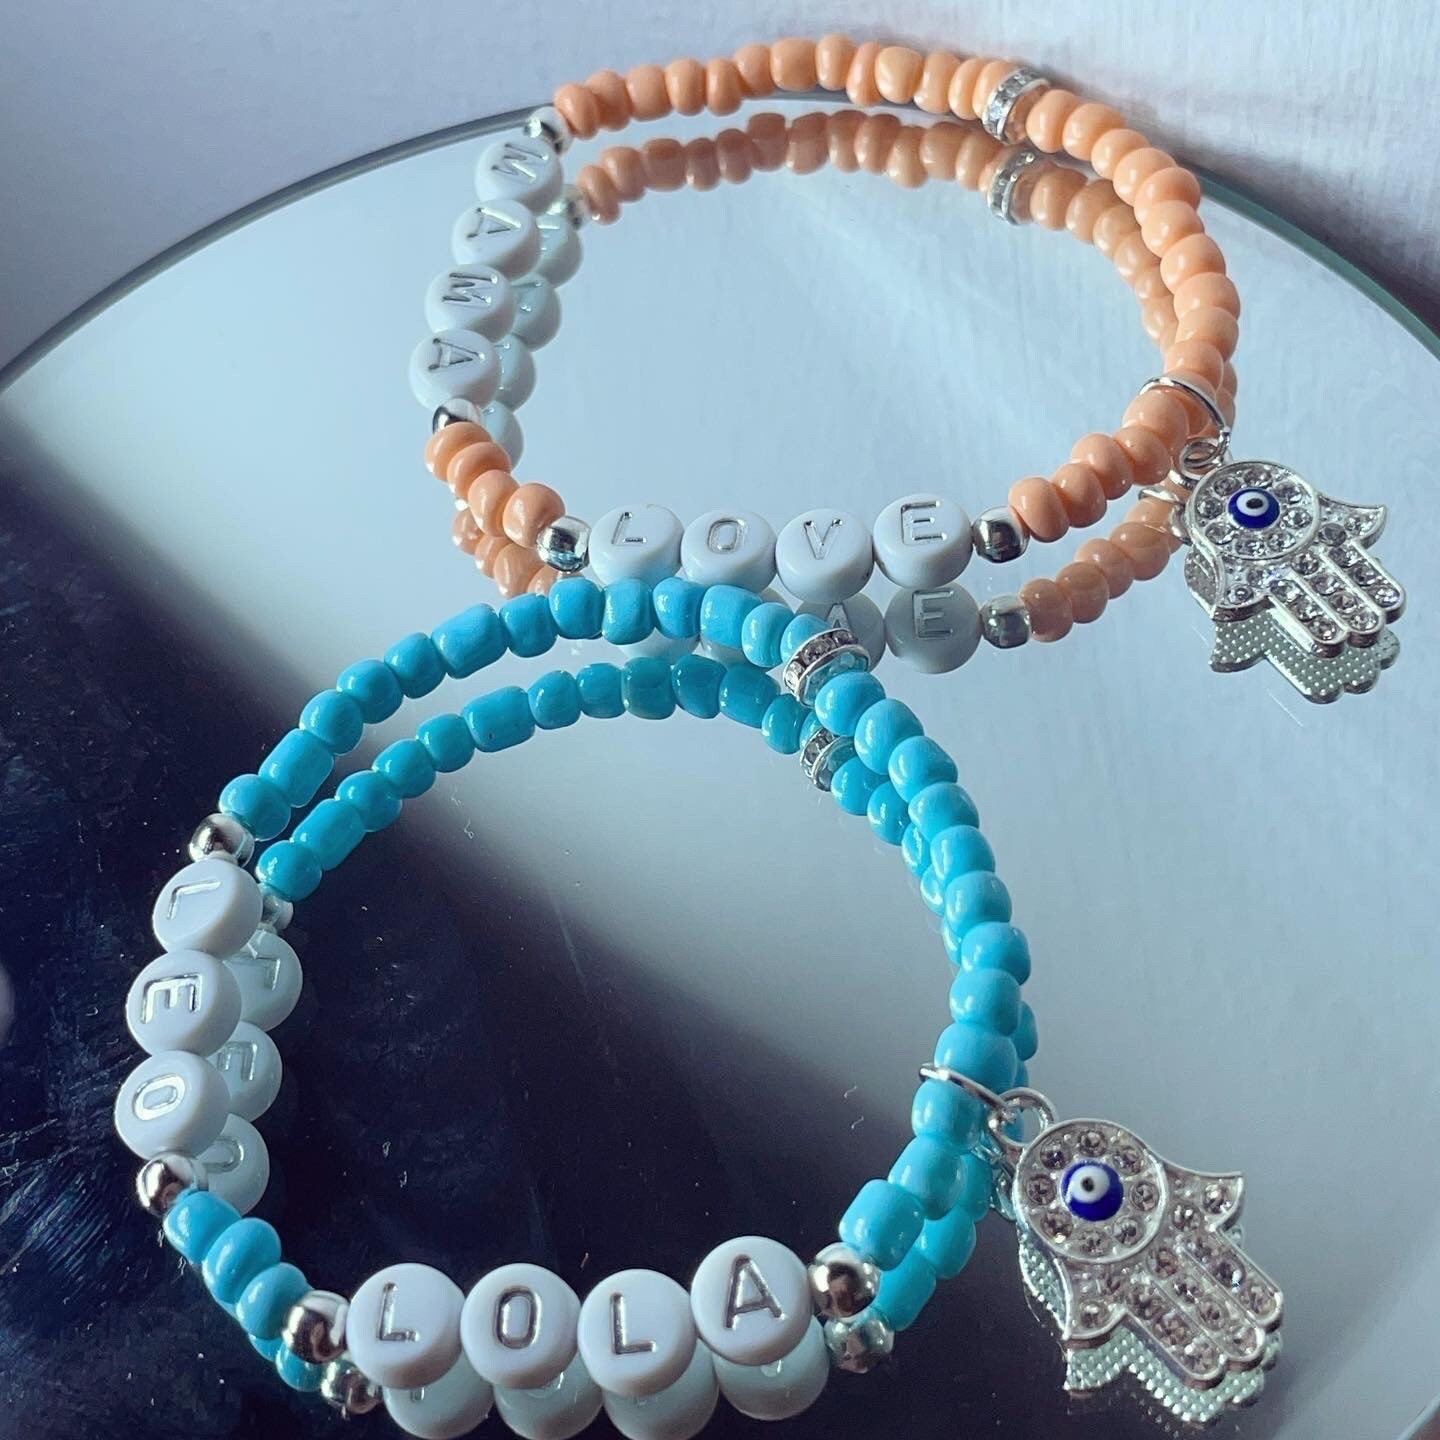 Personalised diamanté hamsa name bracelets coloured glass seed beads